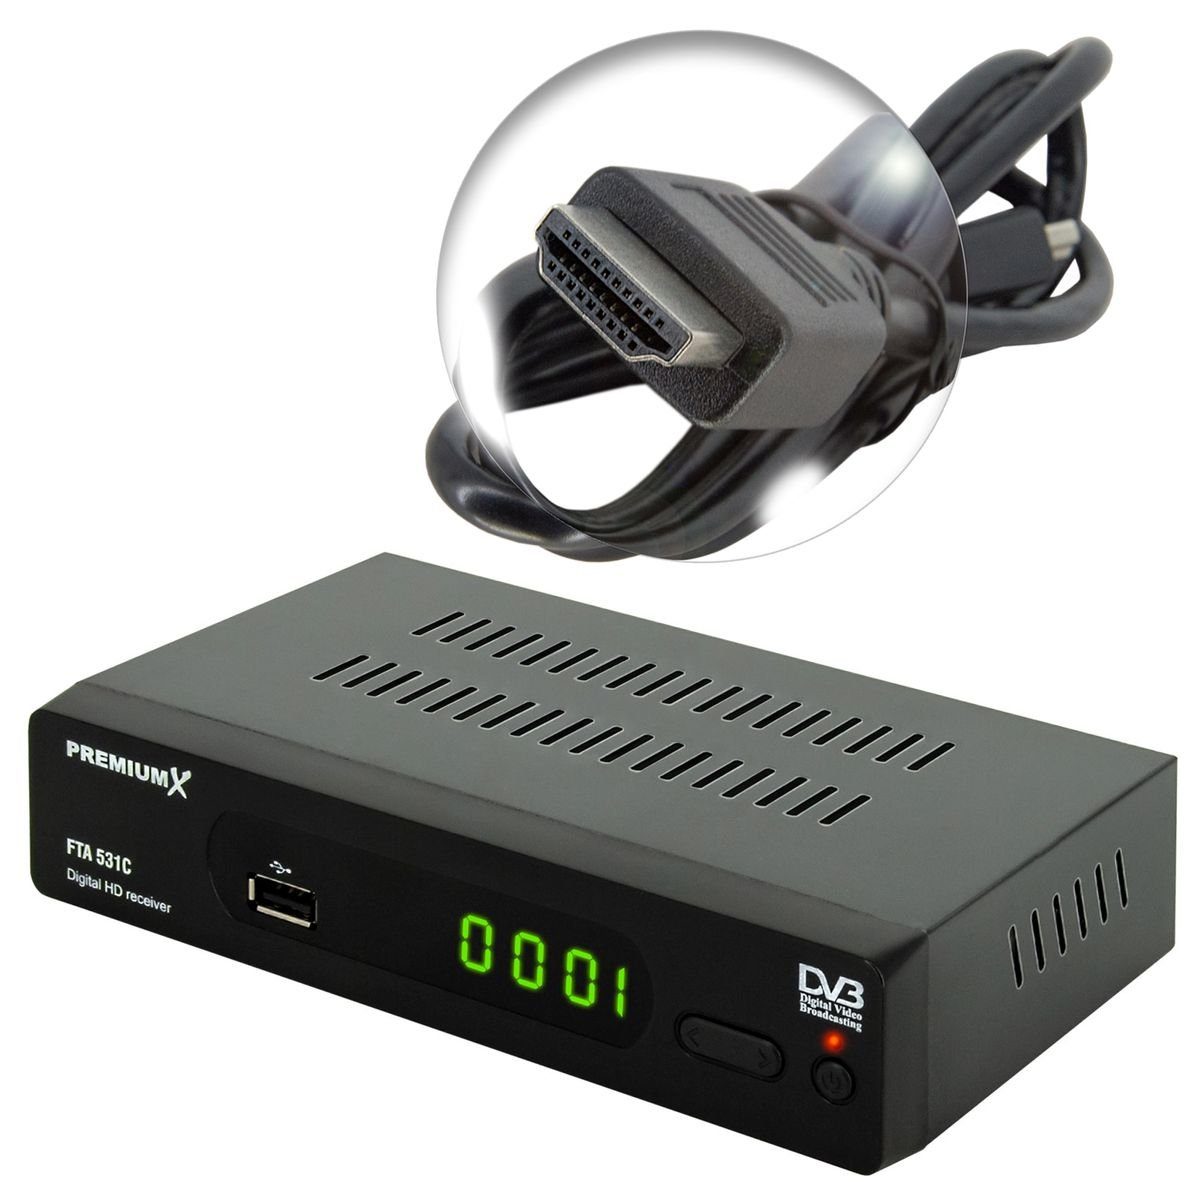 PremiumX FTA 531C Kabel Receiver FullHD DVB-C Kabel-Receiver SCART HDMI USB Digital TV